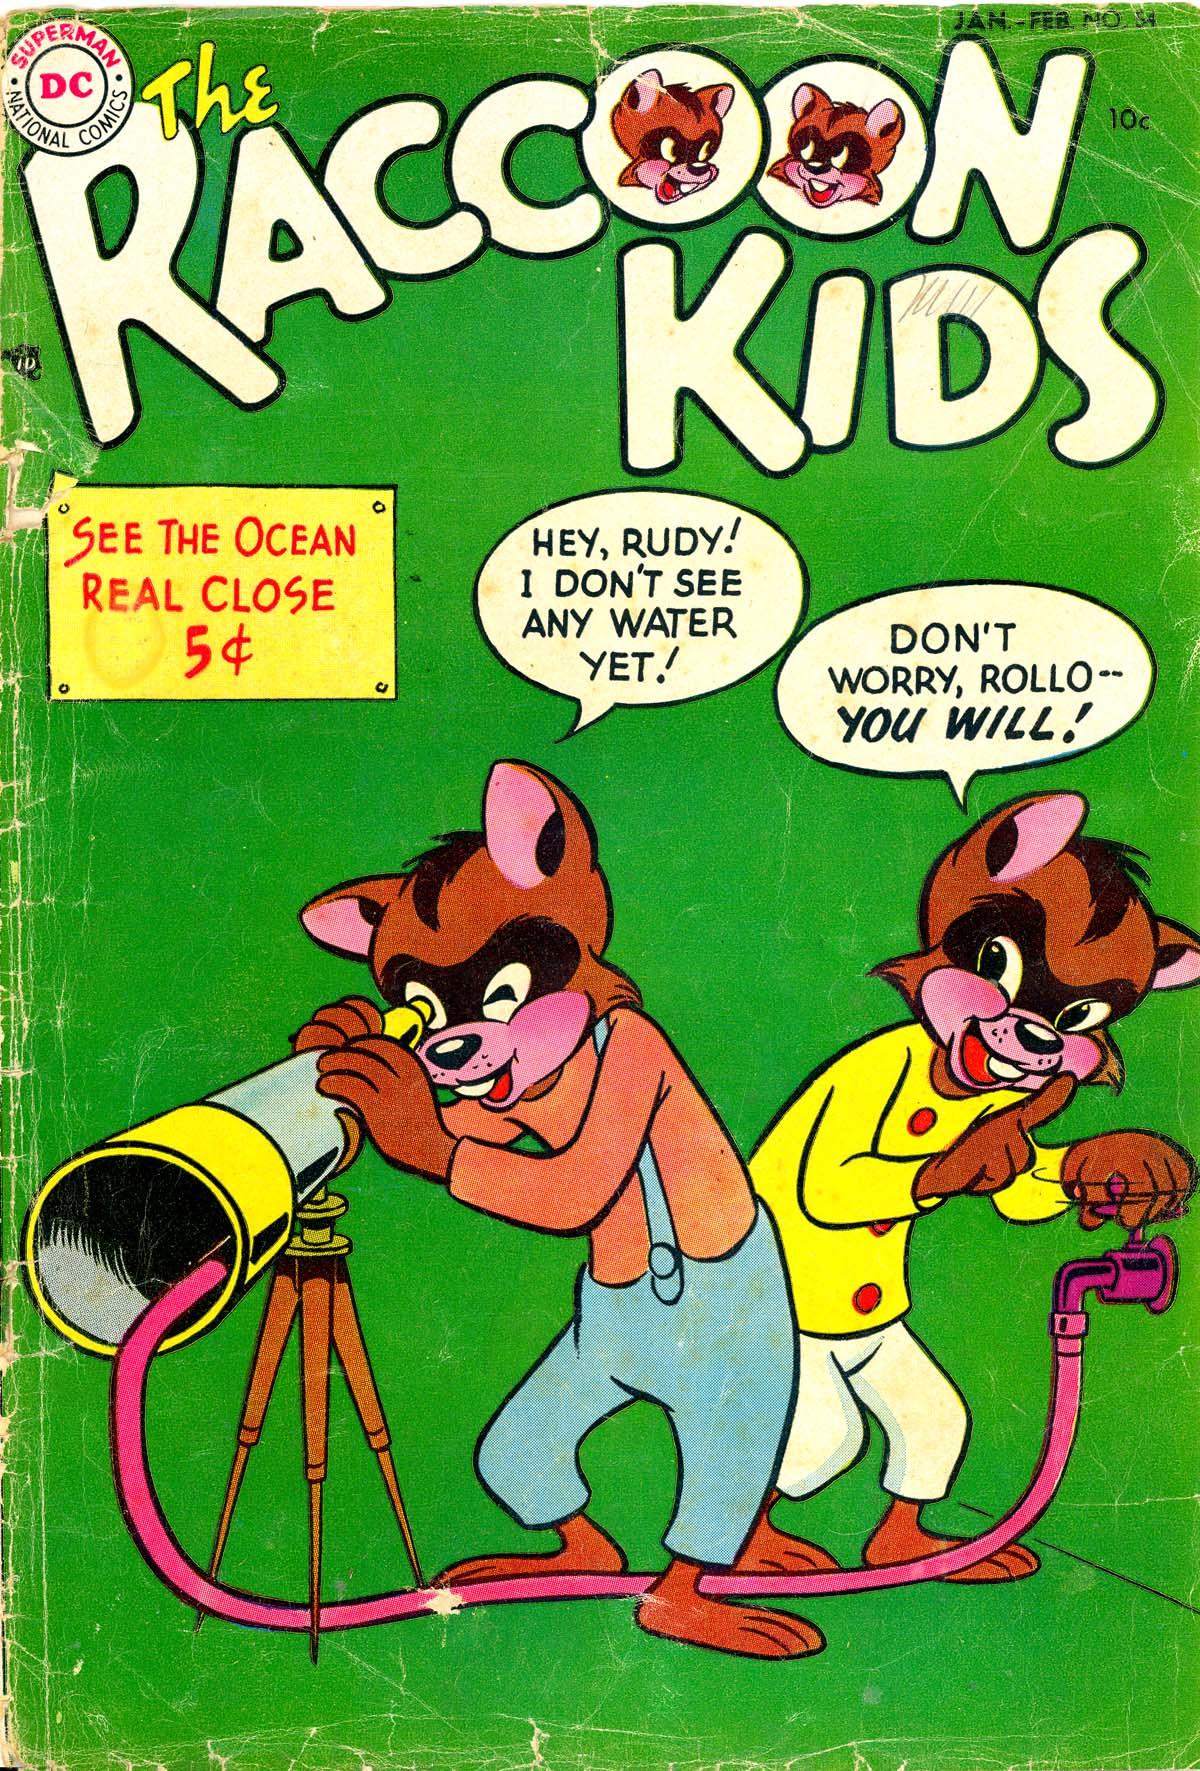 Raccoon Kids Vol. 1 #54